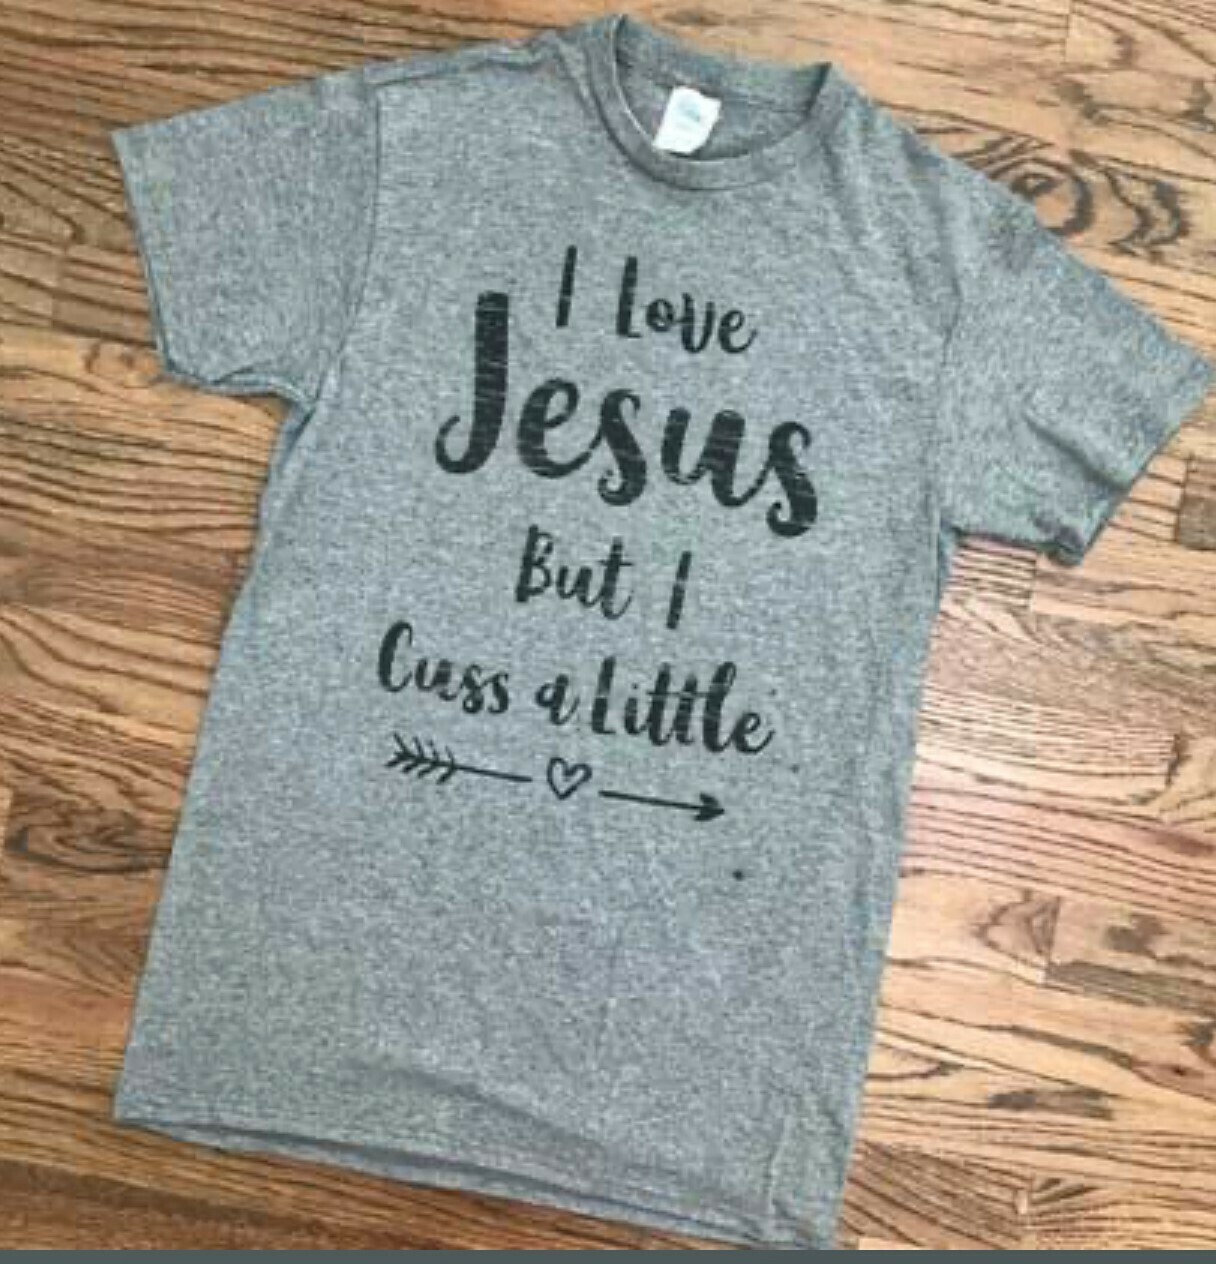 I Love Jesus but I cuss a little